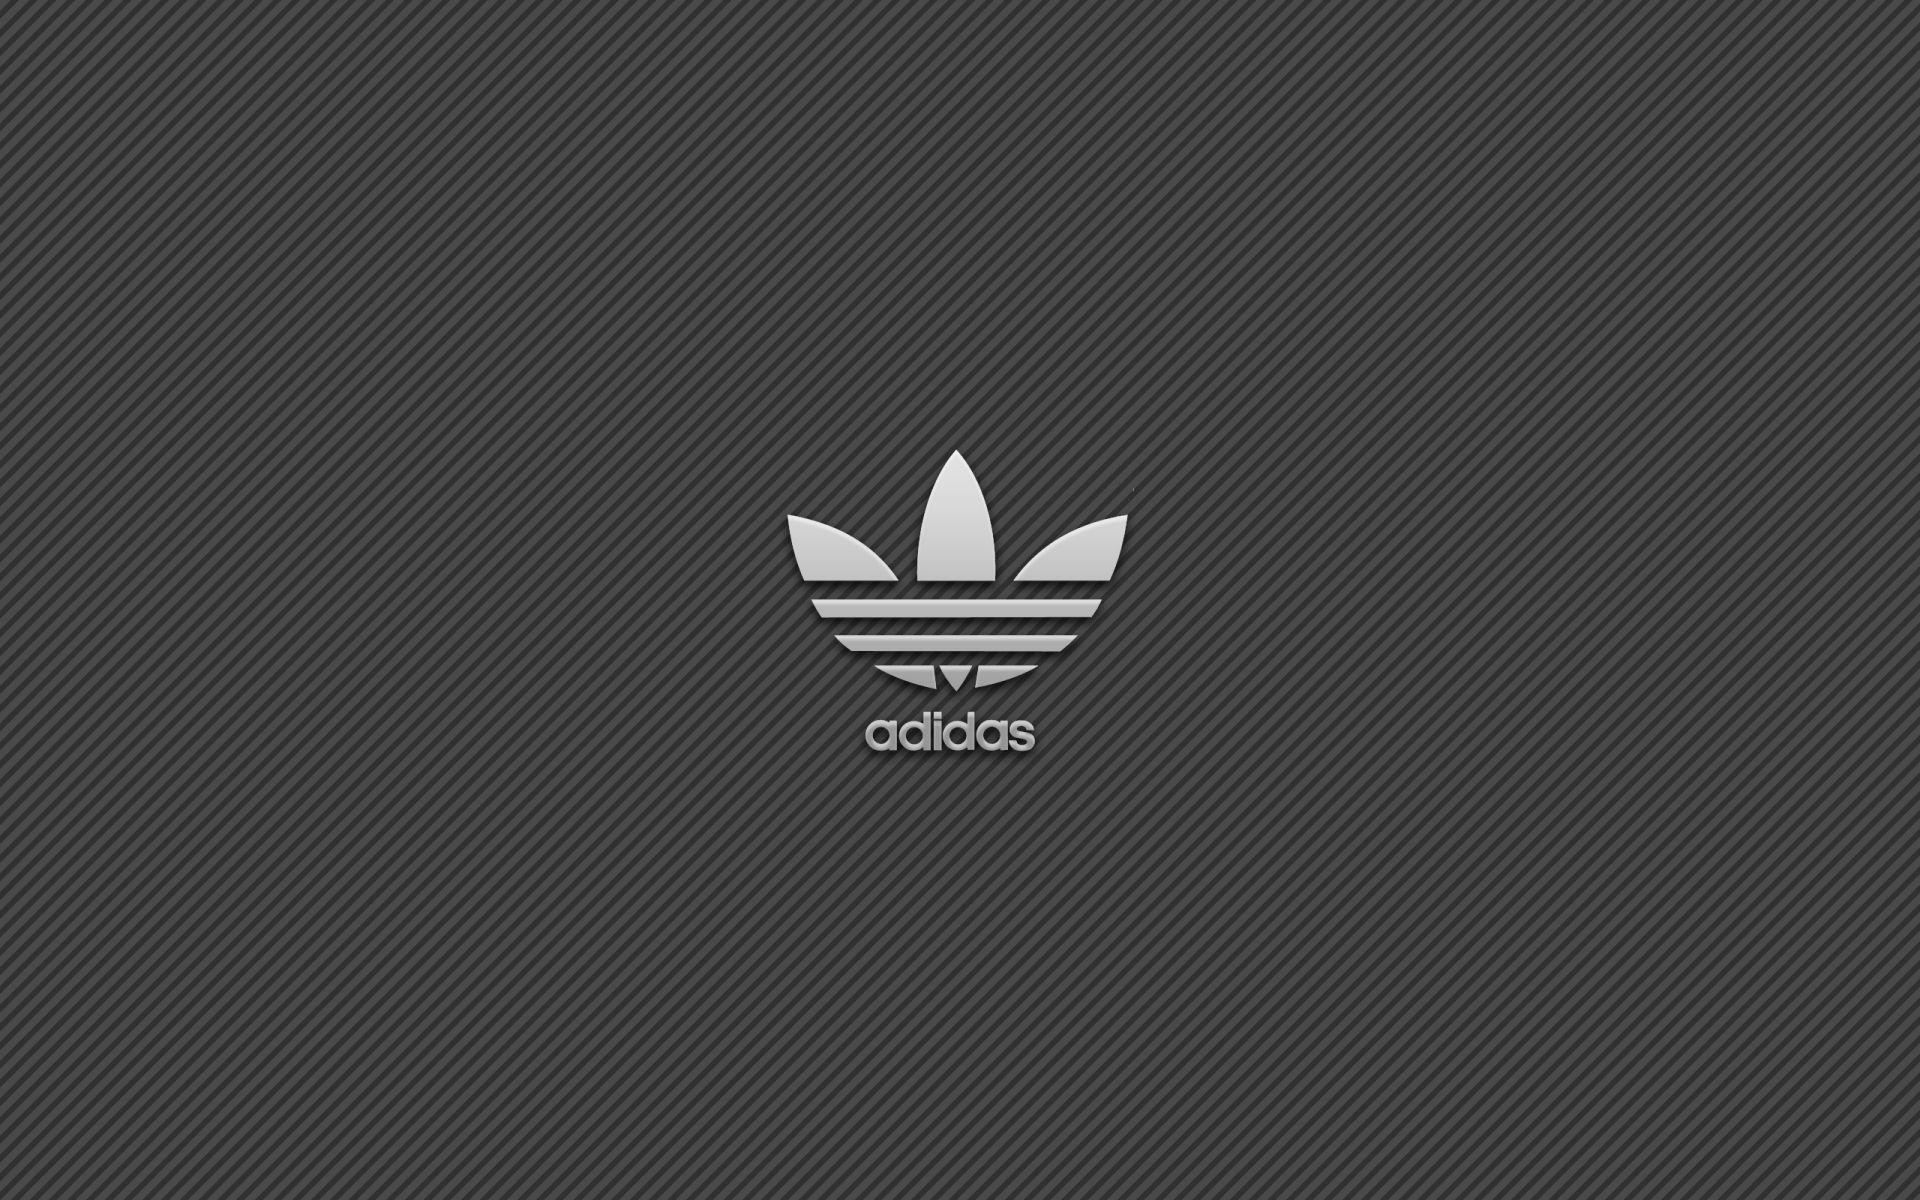 Adidas brand logo Adidas